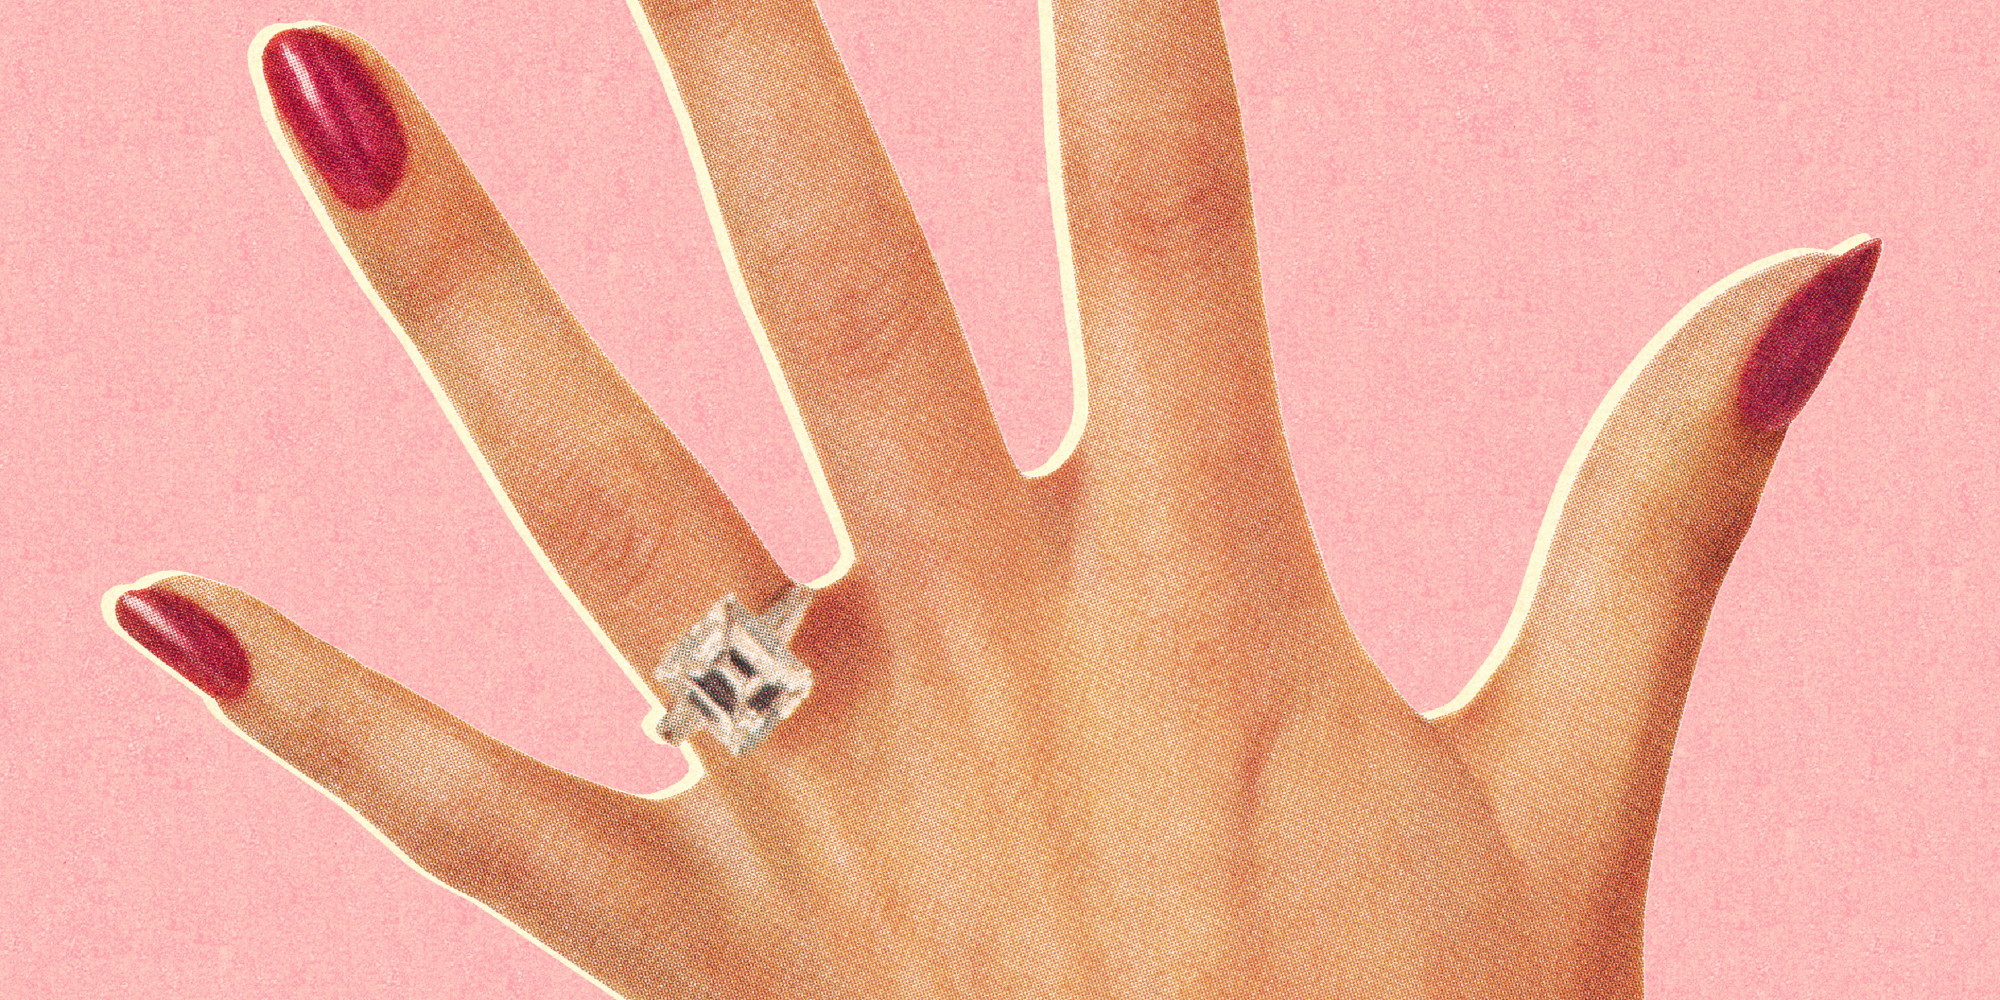 Engagement ring diamond size price